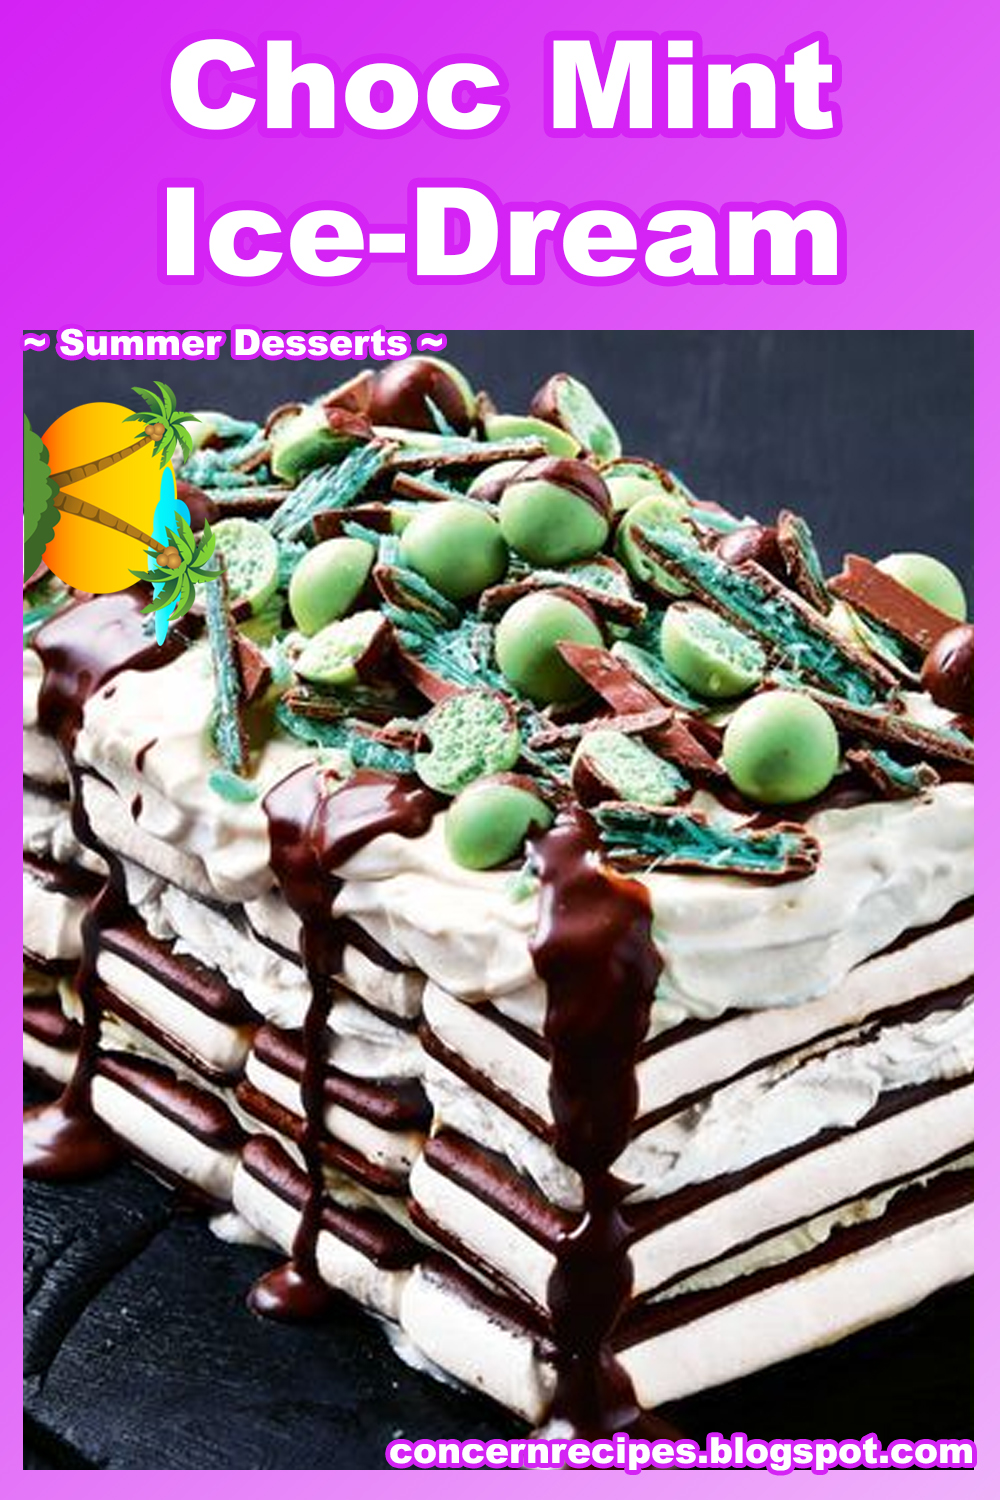 Choc Mint Ice-Dream - Summer Desserts